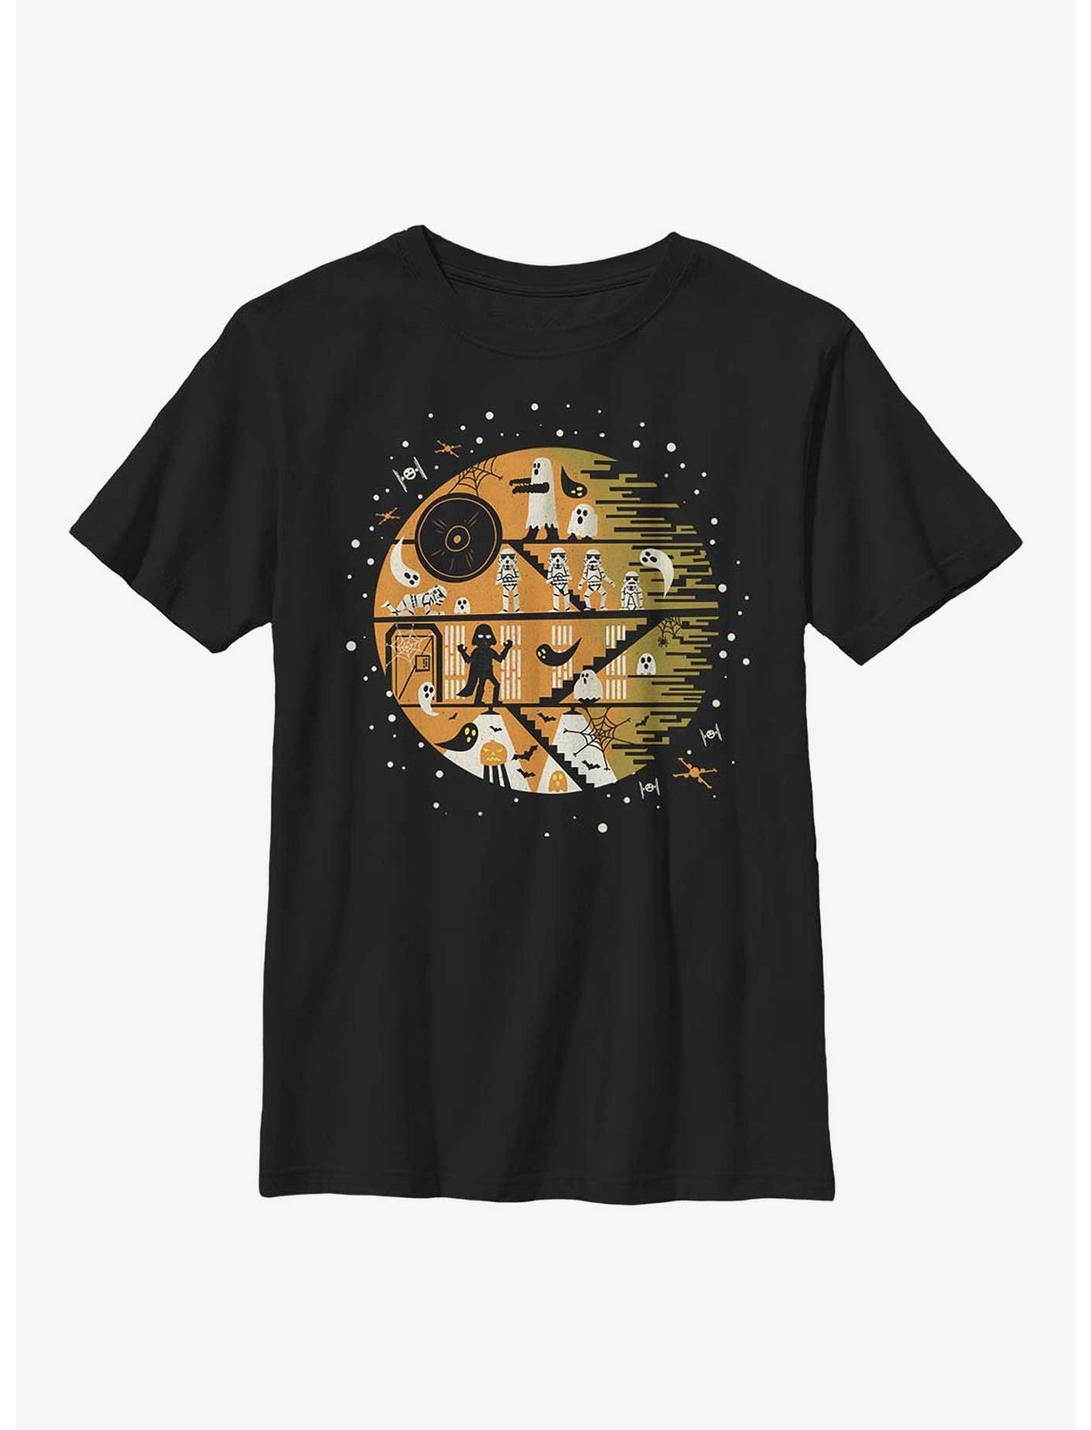 Star Wars Death Star Haunt Youth T-Shirt, BLACK, hi-res